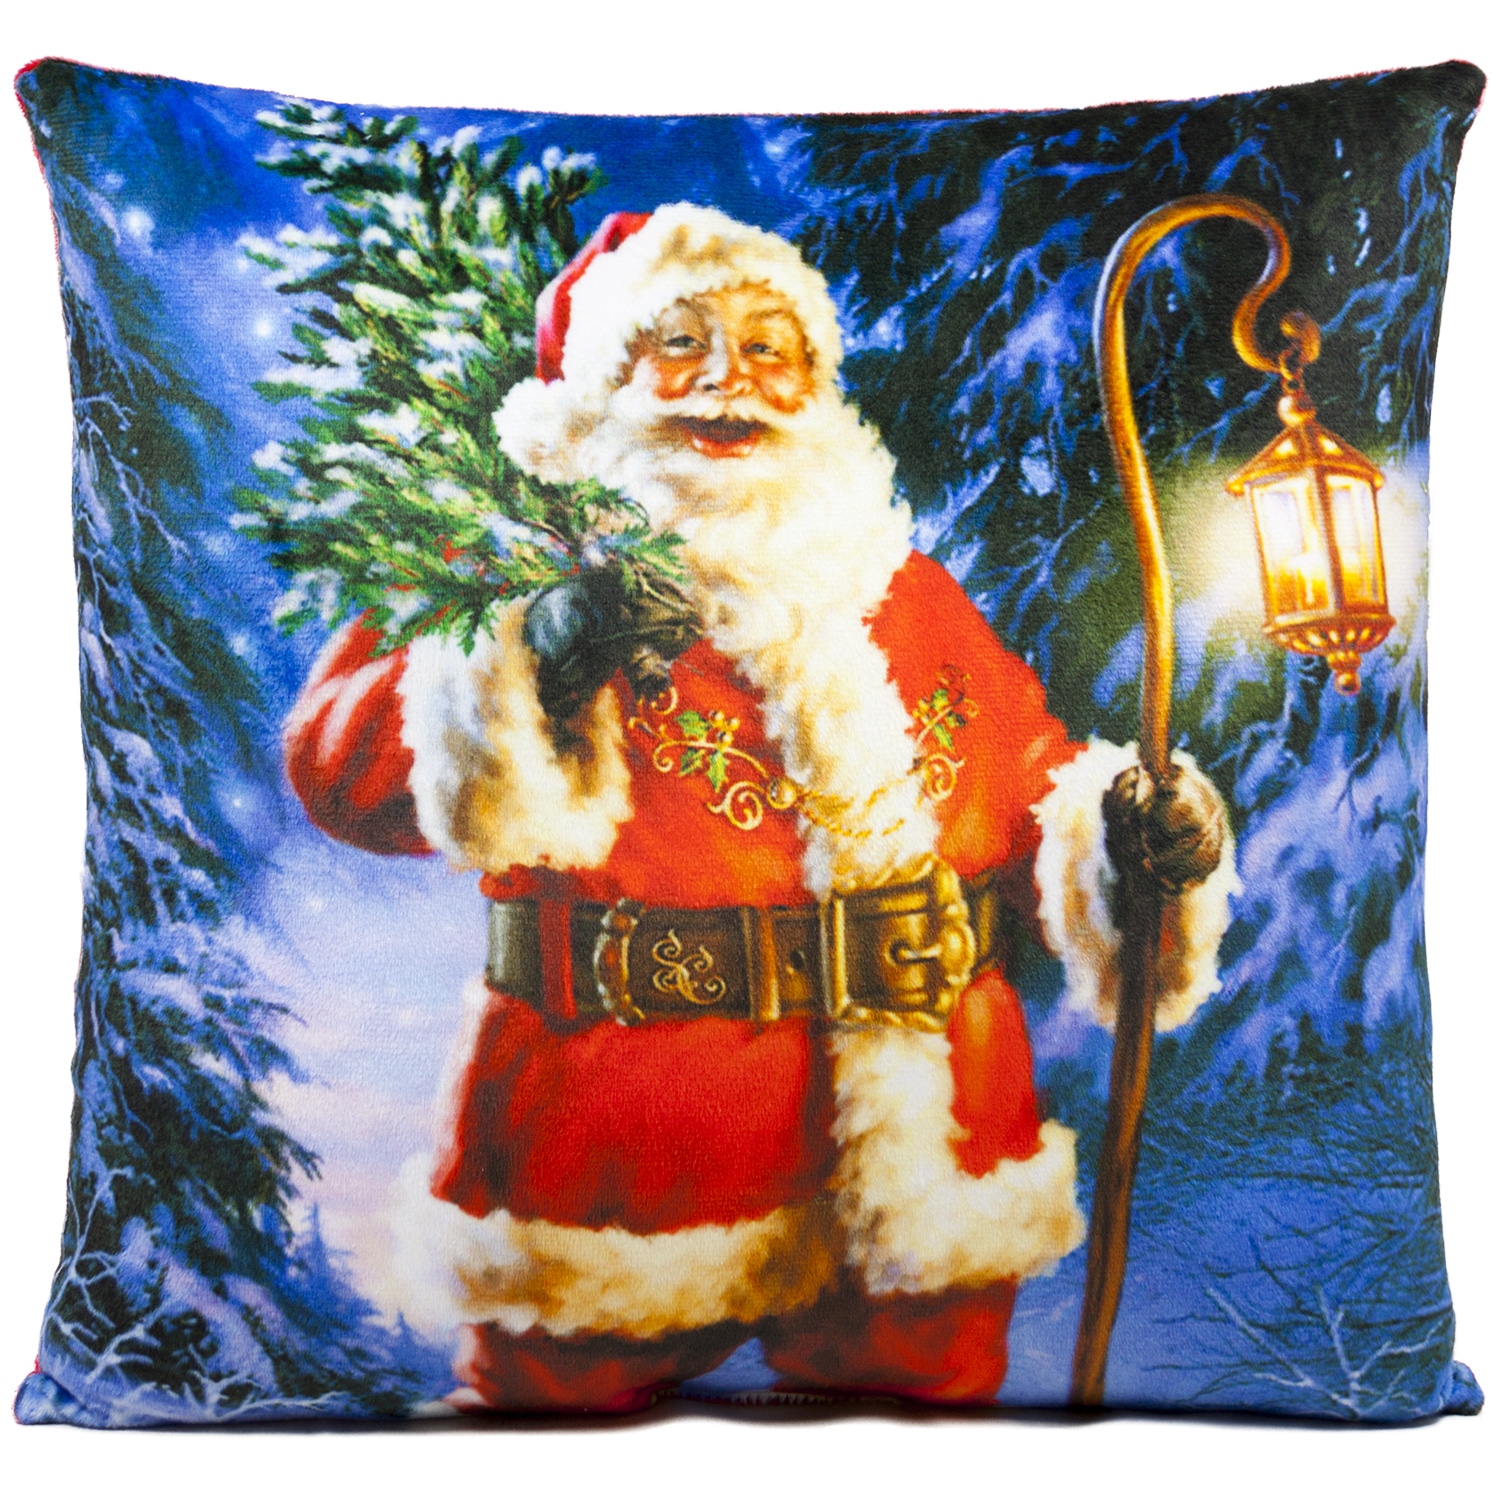 Christmas pillow - Santa Claus with a lantern